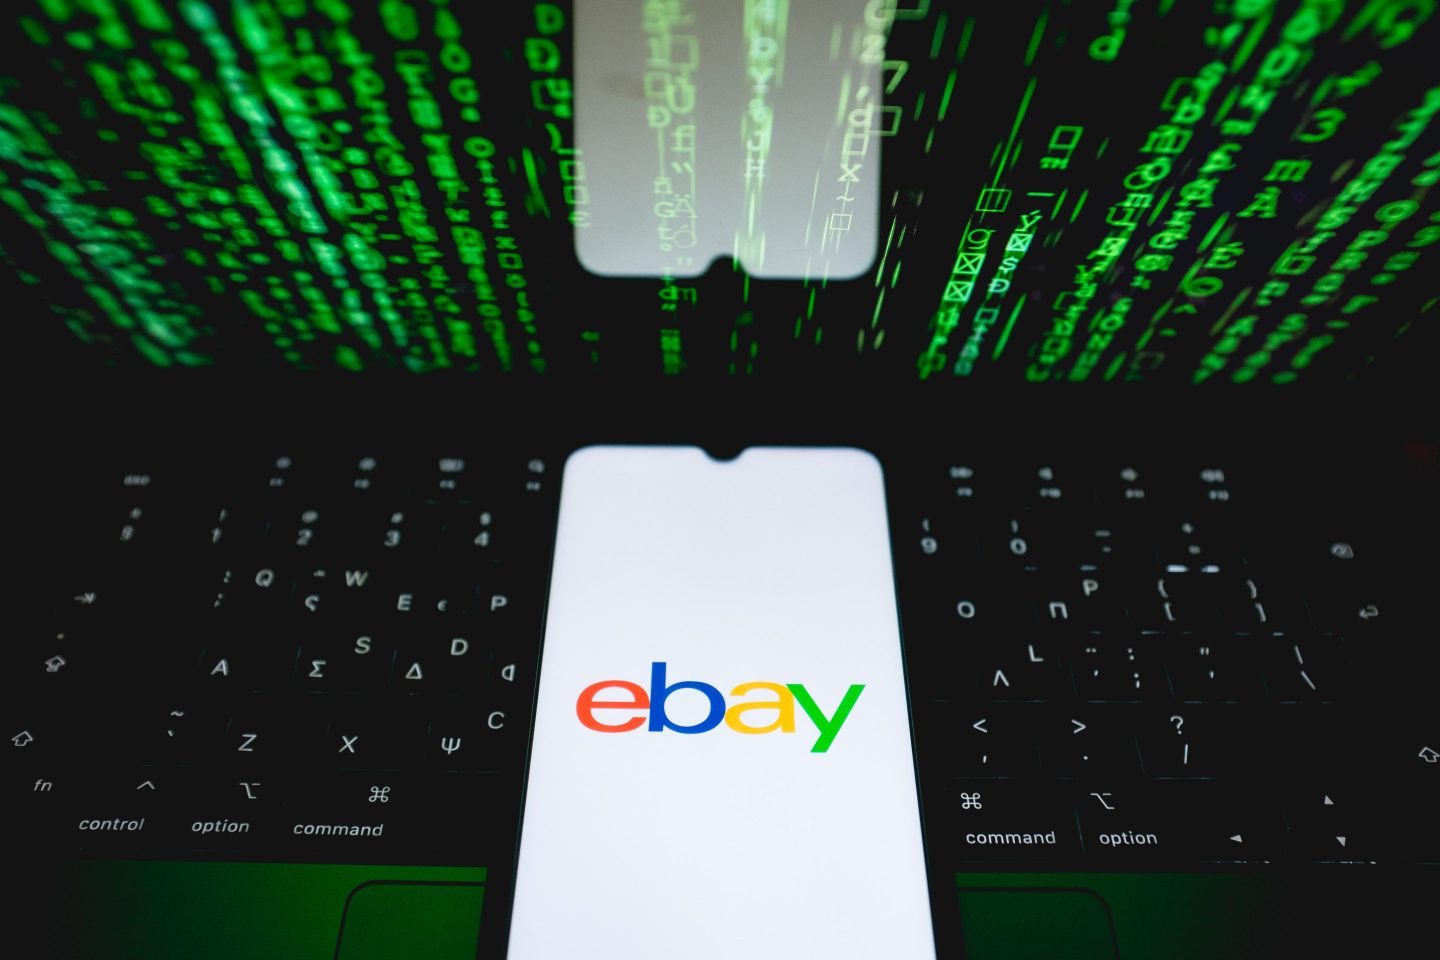 eBay logo on a phone